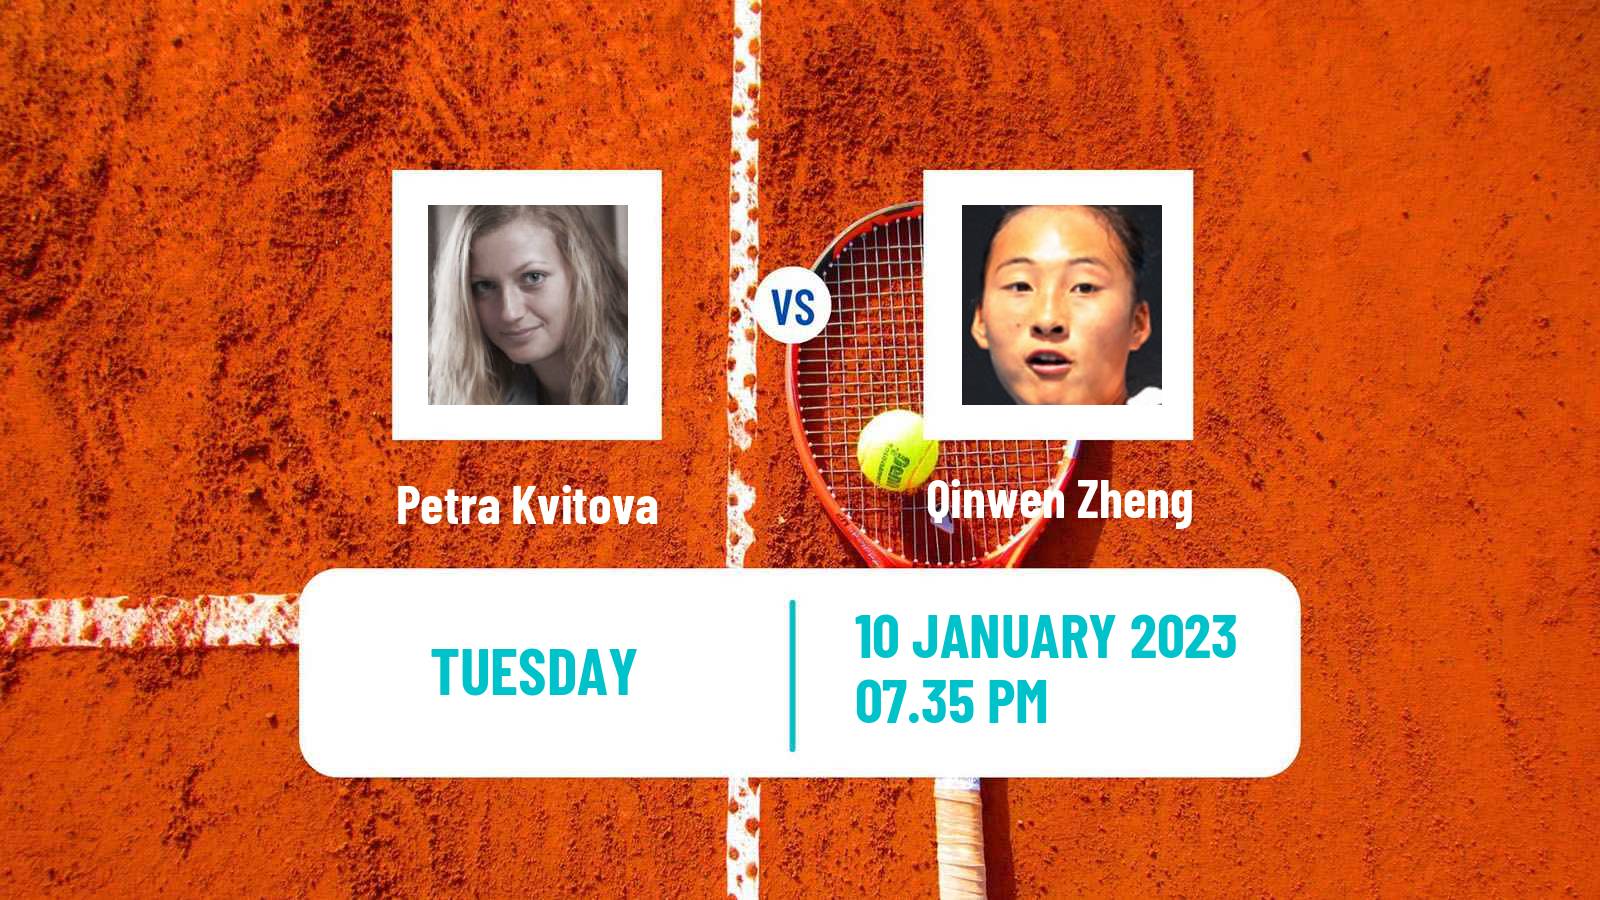 Tennis WTA Adelaide 2 Petra Kvitova - Qinwen Zheng